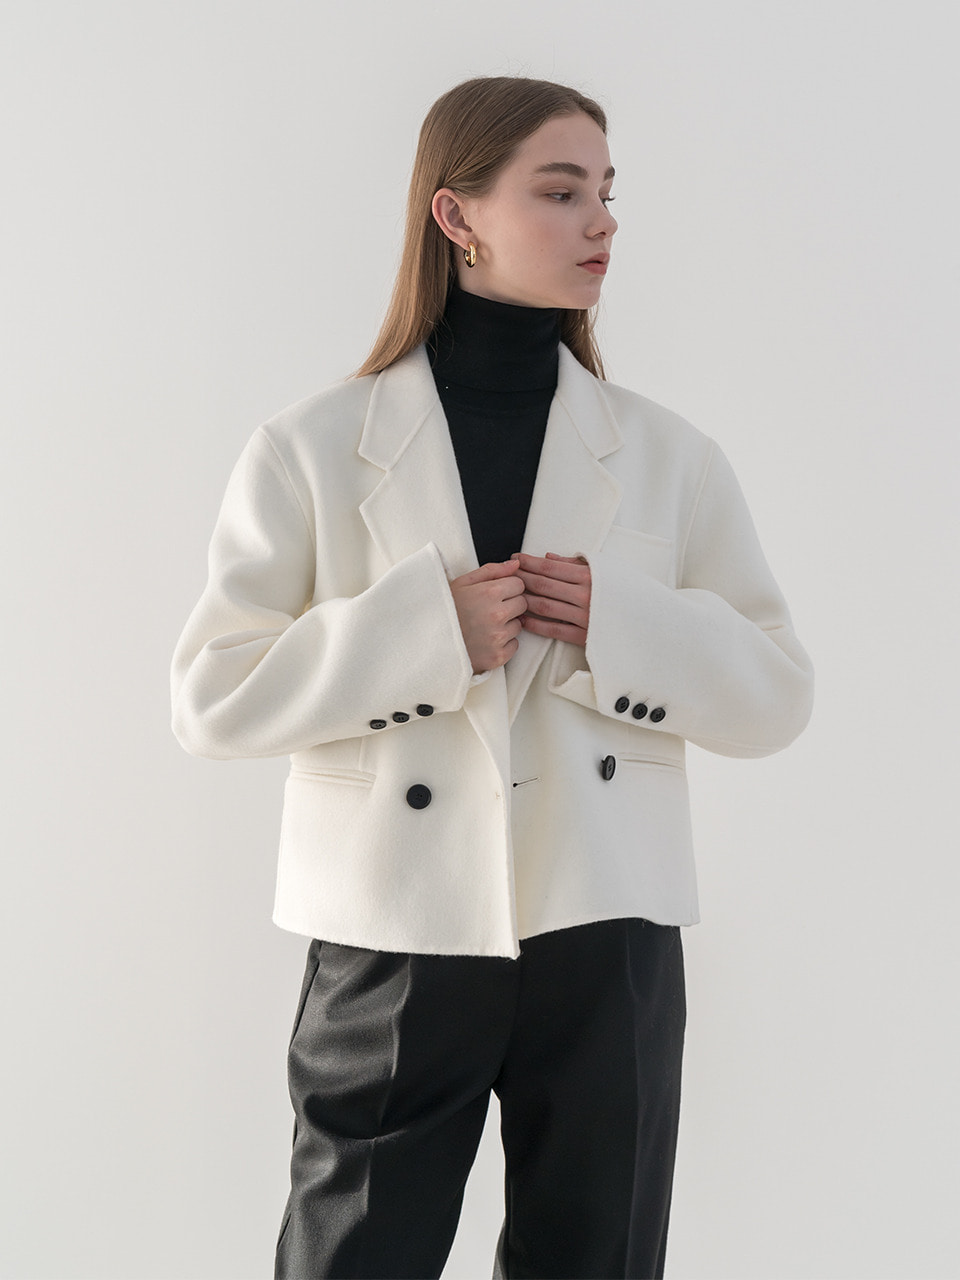 Premium handmade wool crop double jacket in ivory